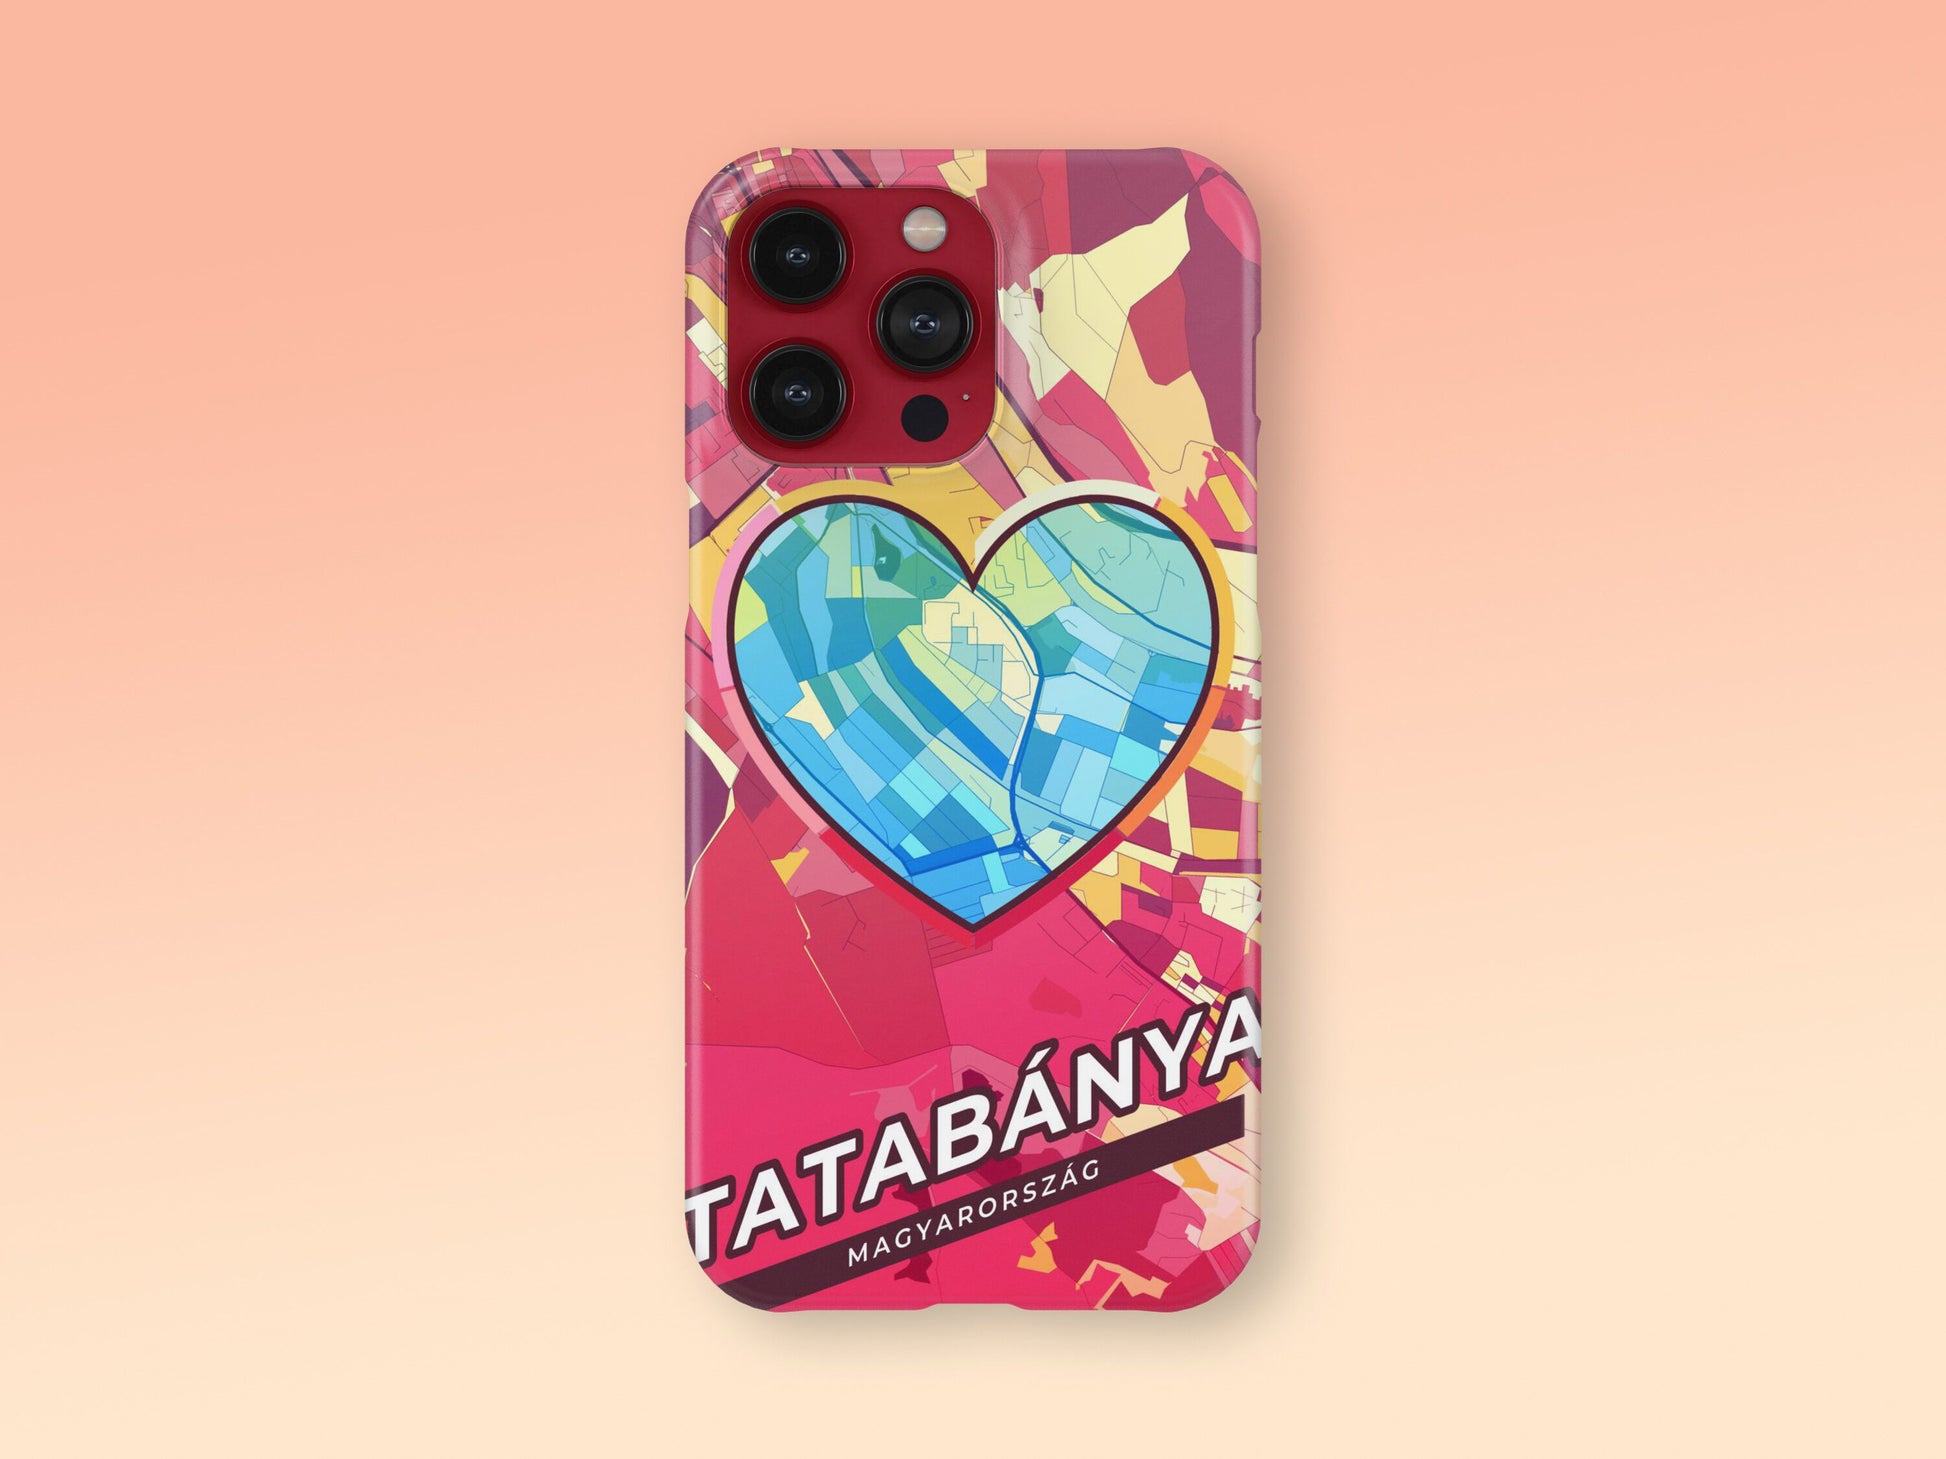 Tatabánya Hungary slim phone case with colorful icon 2